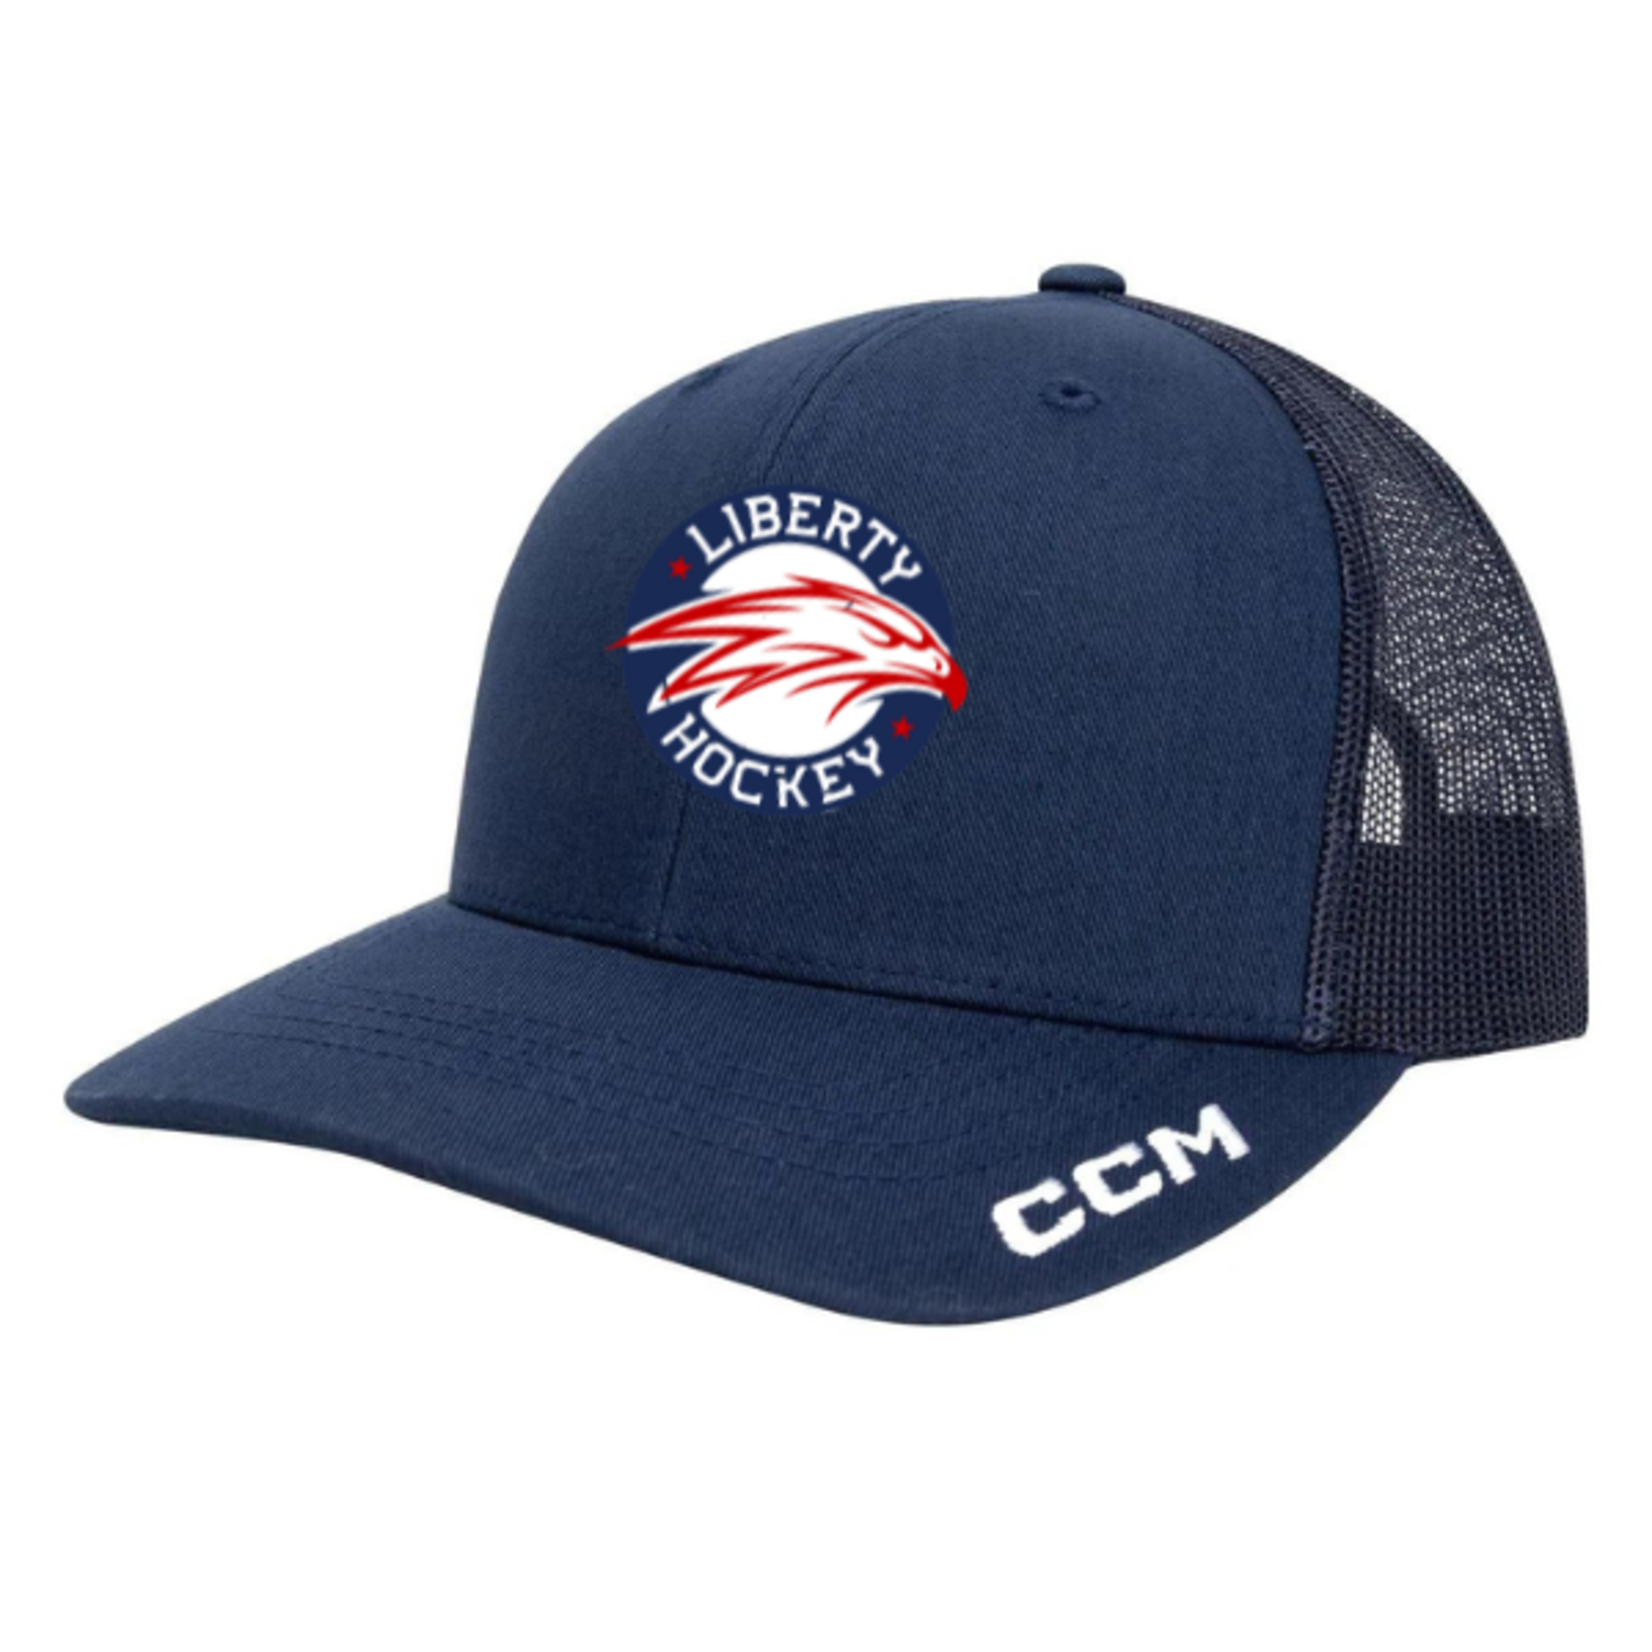 CCM Liberty CCM Trucker Hat (NAVY) YOUTH